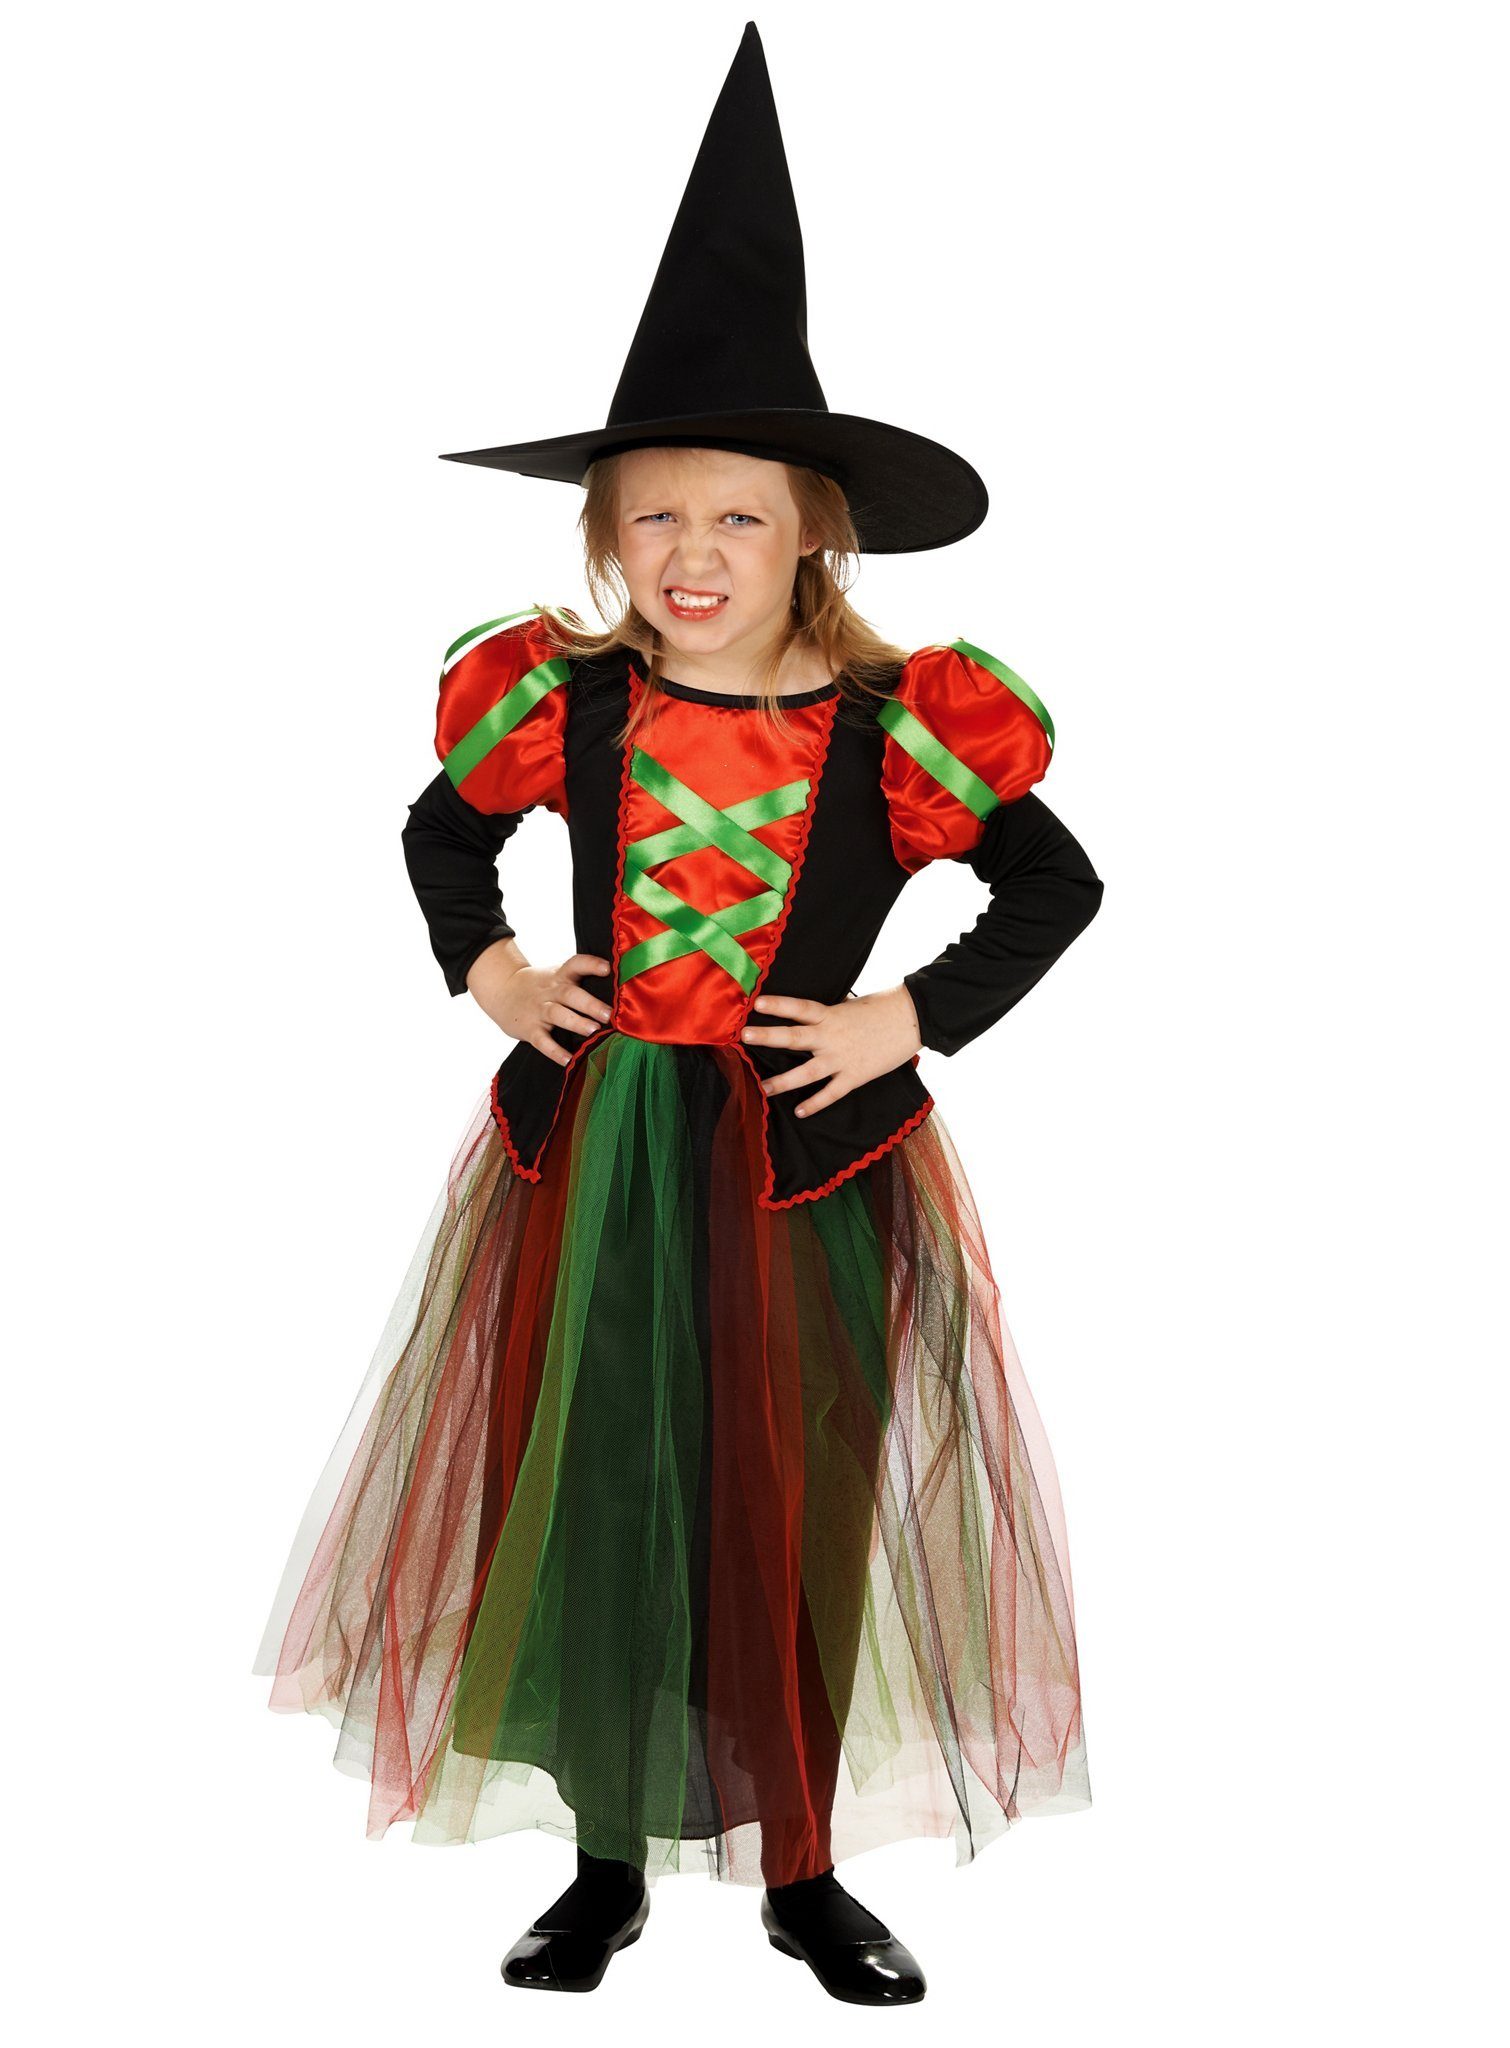 Metamorph Kostüm Wetterhexe, Halloween-Hexenkostüm mit giftgrünen Bändern